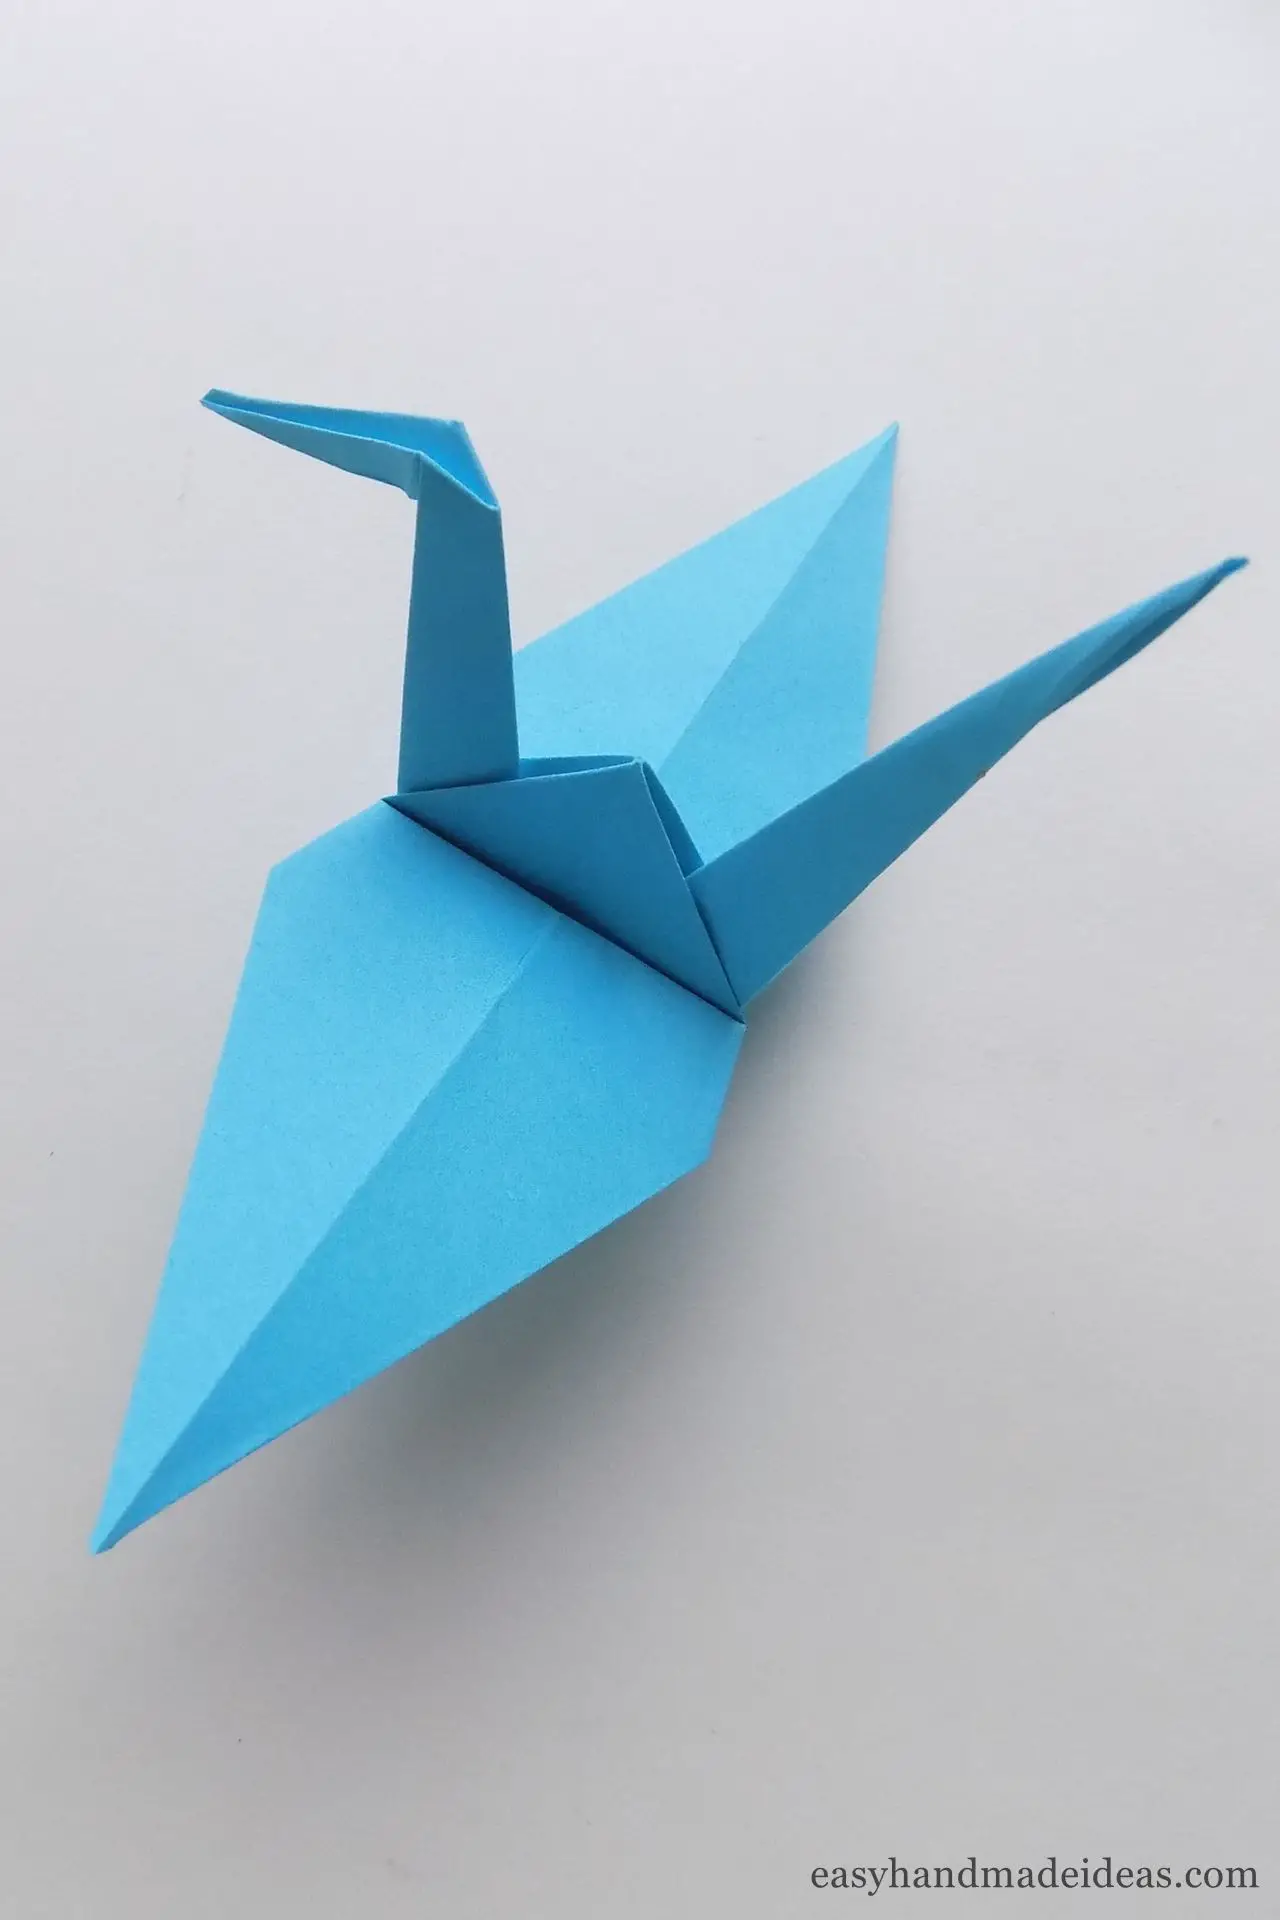 Origami crane is ready